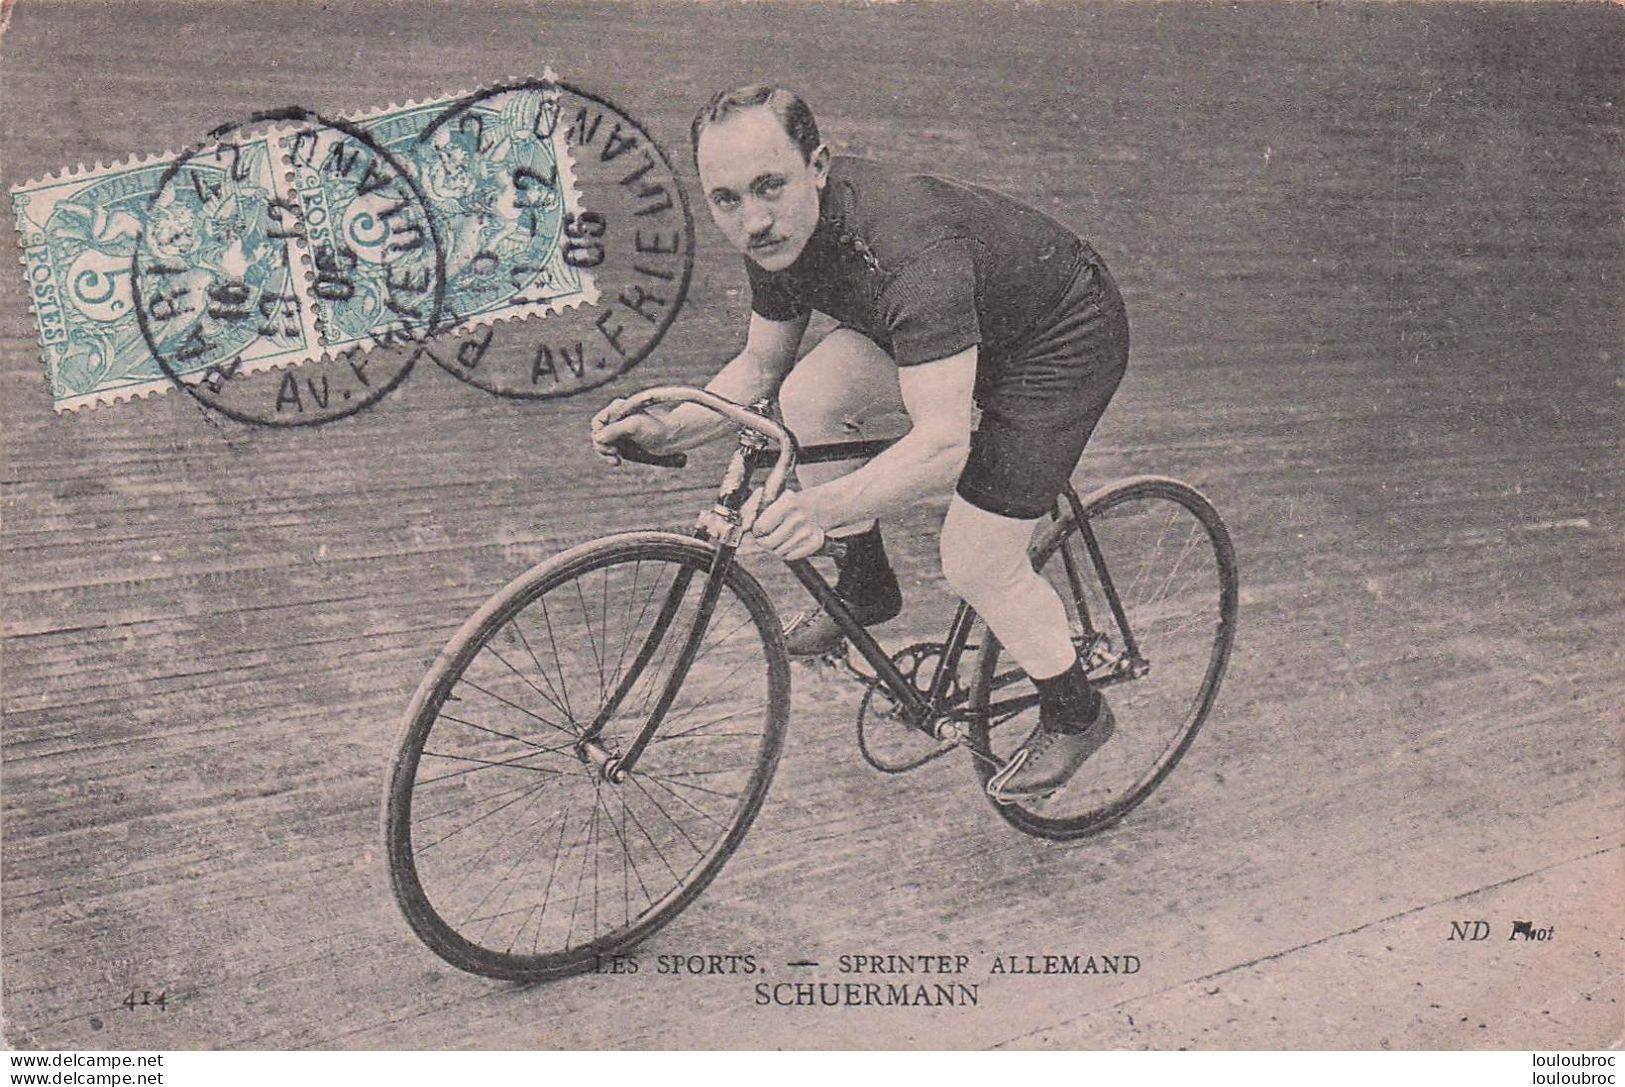 SCHEUERMANN SPRINTER ALLEMAND - Cycling